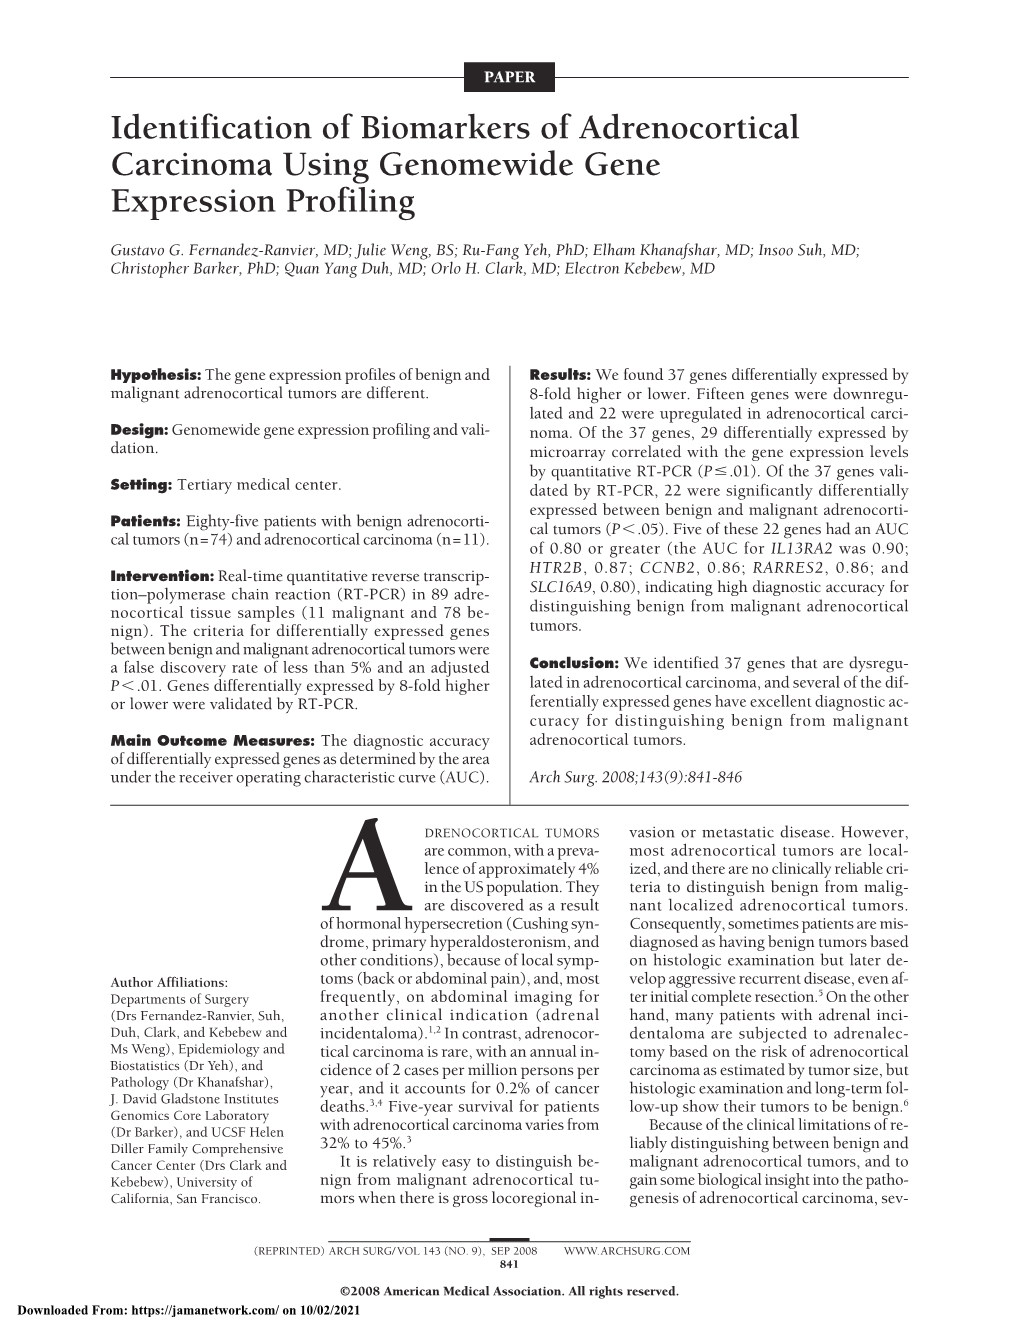 Identification of Biomarkers of Adrenocortical Carcinoma Using Genomewide Gene Expression Profiling